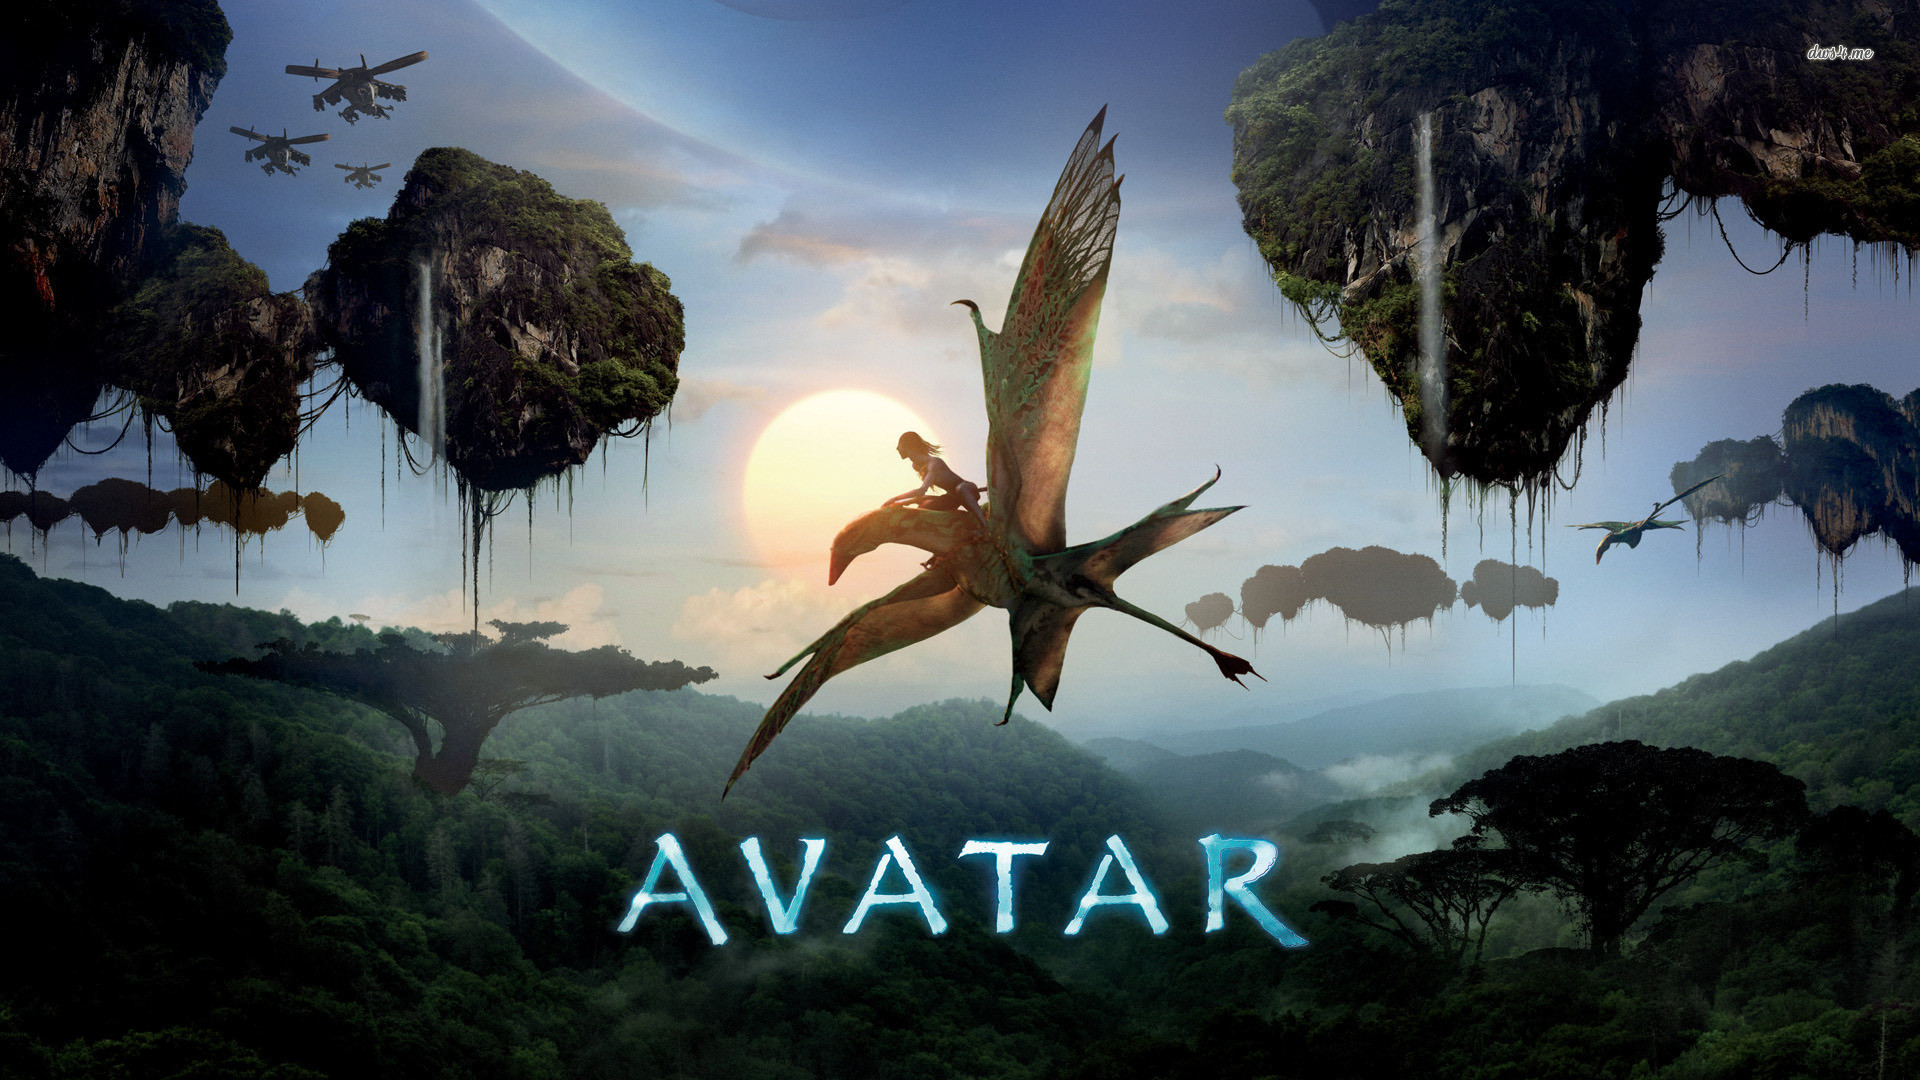 1920x1080 1000+ images about Avatar movie on Pinterest | Avatar fan art .